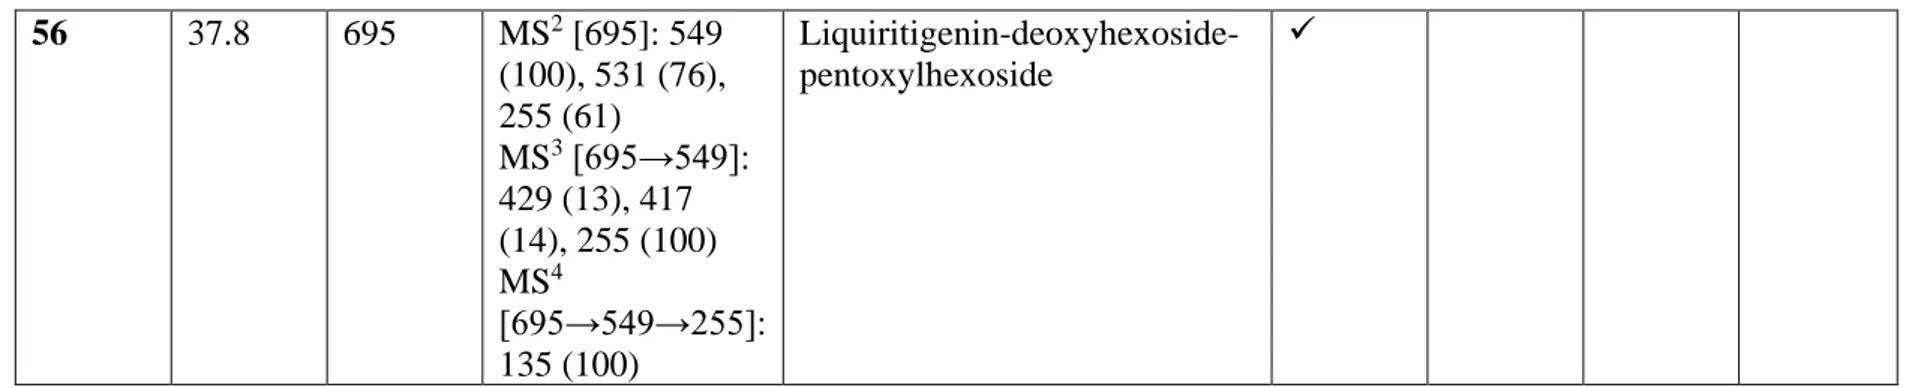 Tablo 4.1. Devamı  56  37.8  695  MS 2  [695]: 549  (100), 531 (76),  255 (61)   MS 3  [695→549]:  429 (13), 417  (14), 255 (100)   MS 4  [695→549→255]:  135 (100)  Liquiritigenin-deoxyhexoside-pentoxylhexoside  ✓ 